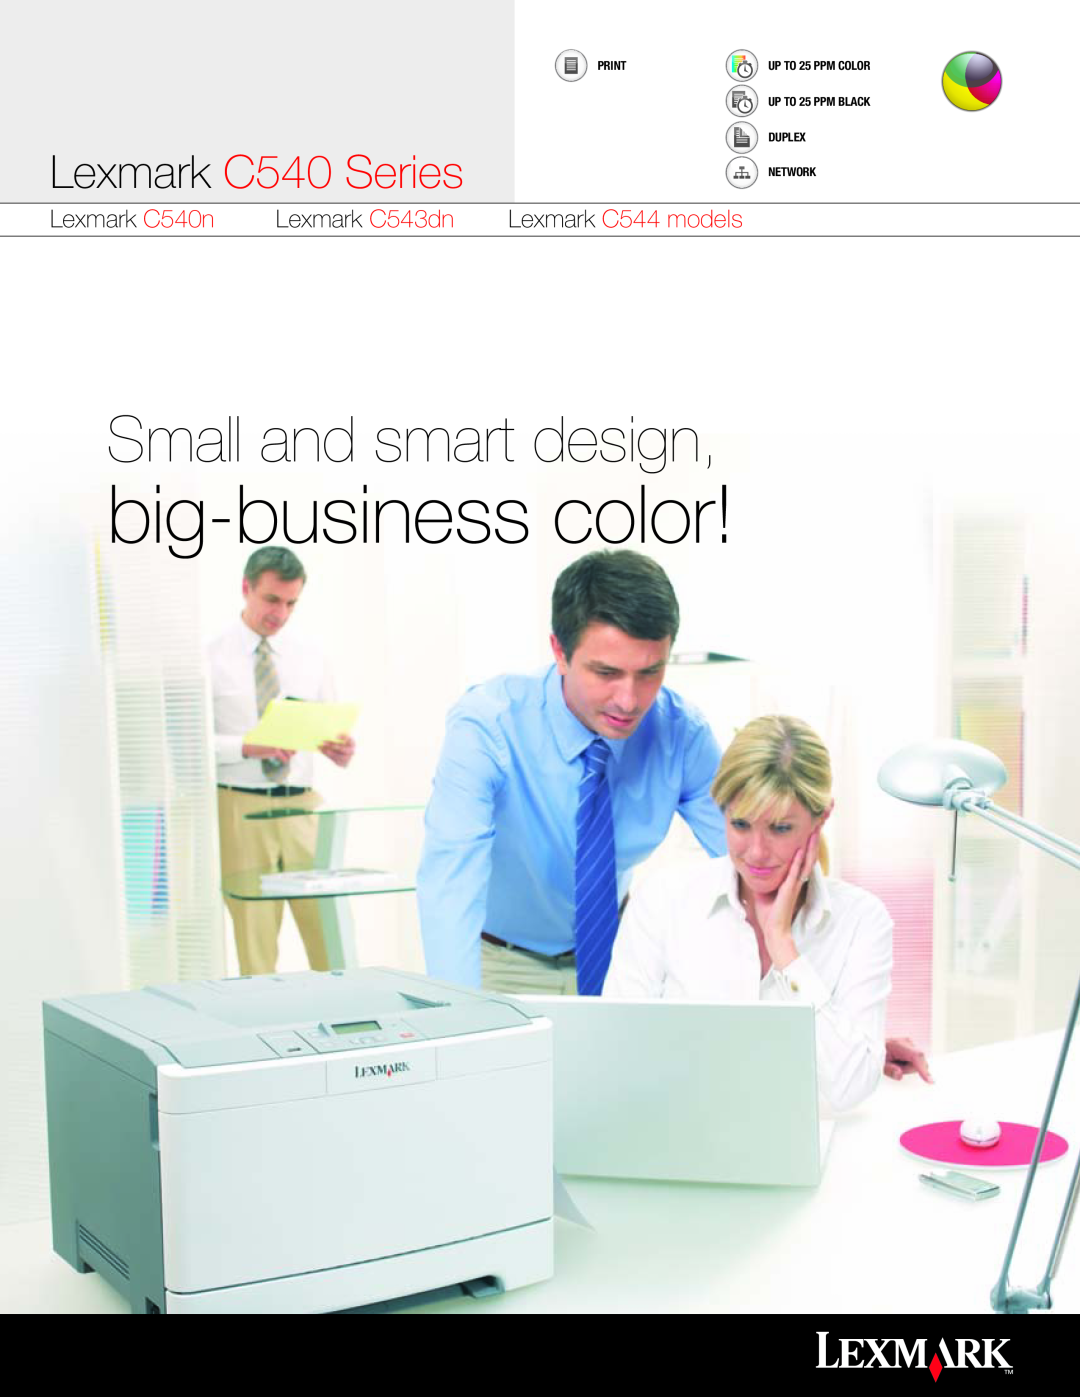 Lexmark C544 manual big-businesscolor, Small and smart design, Lexmark C540 Series 